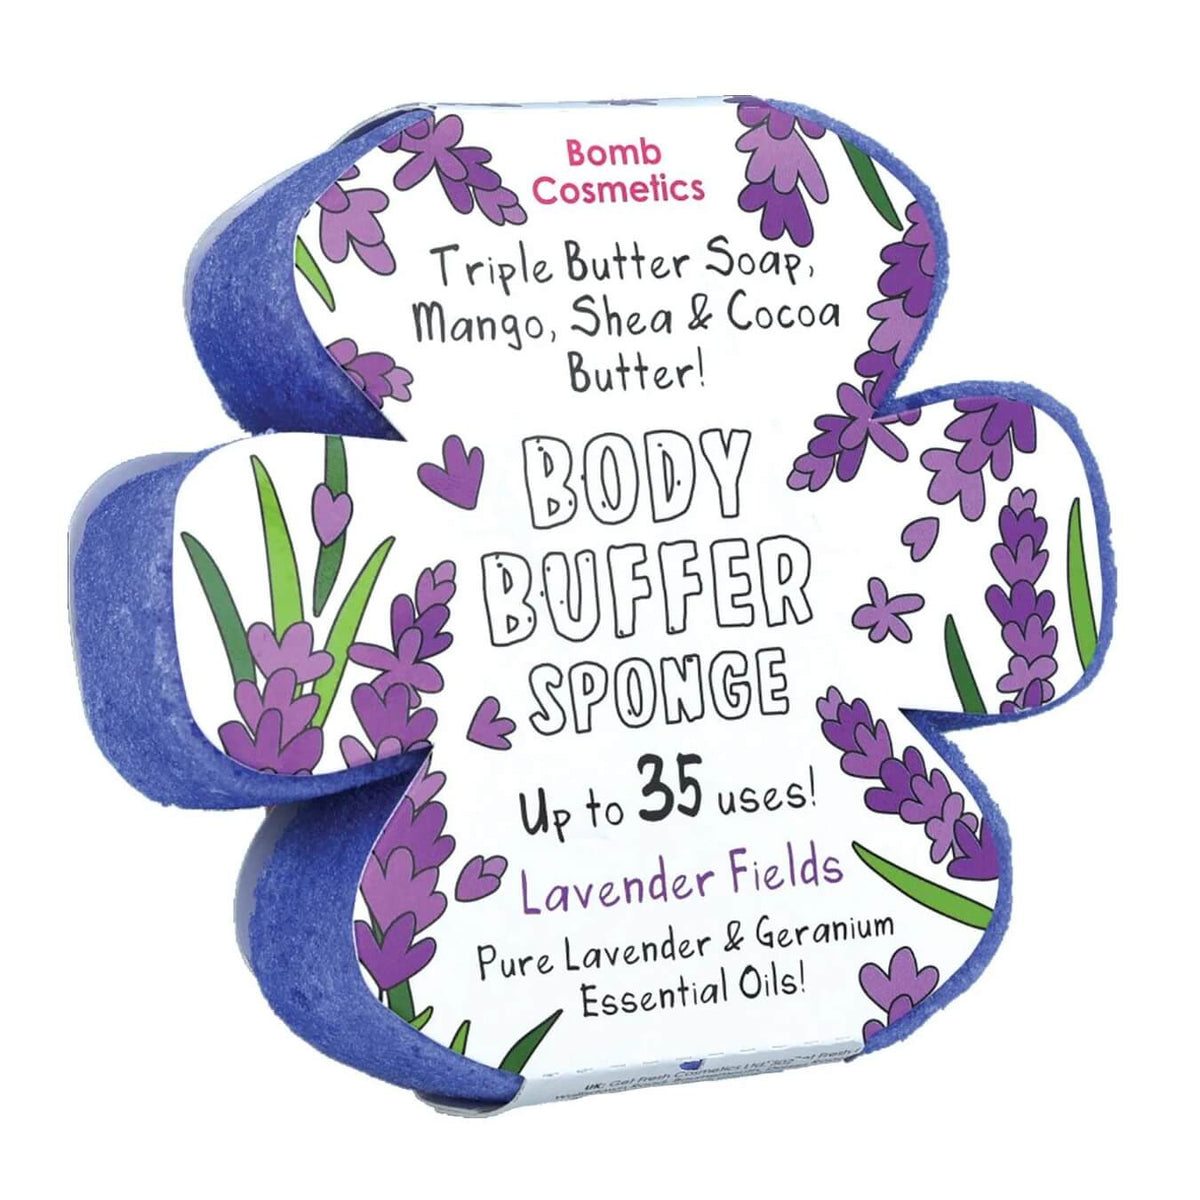 Lavender Fields Body Buffer Sponge by Bomb Cosmetics at Under the Sun Southend